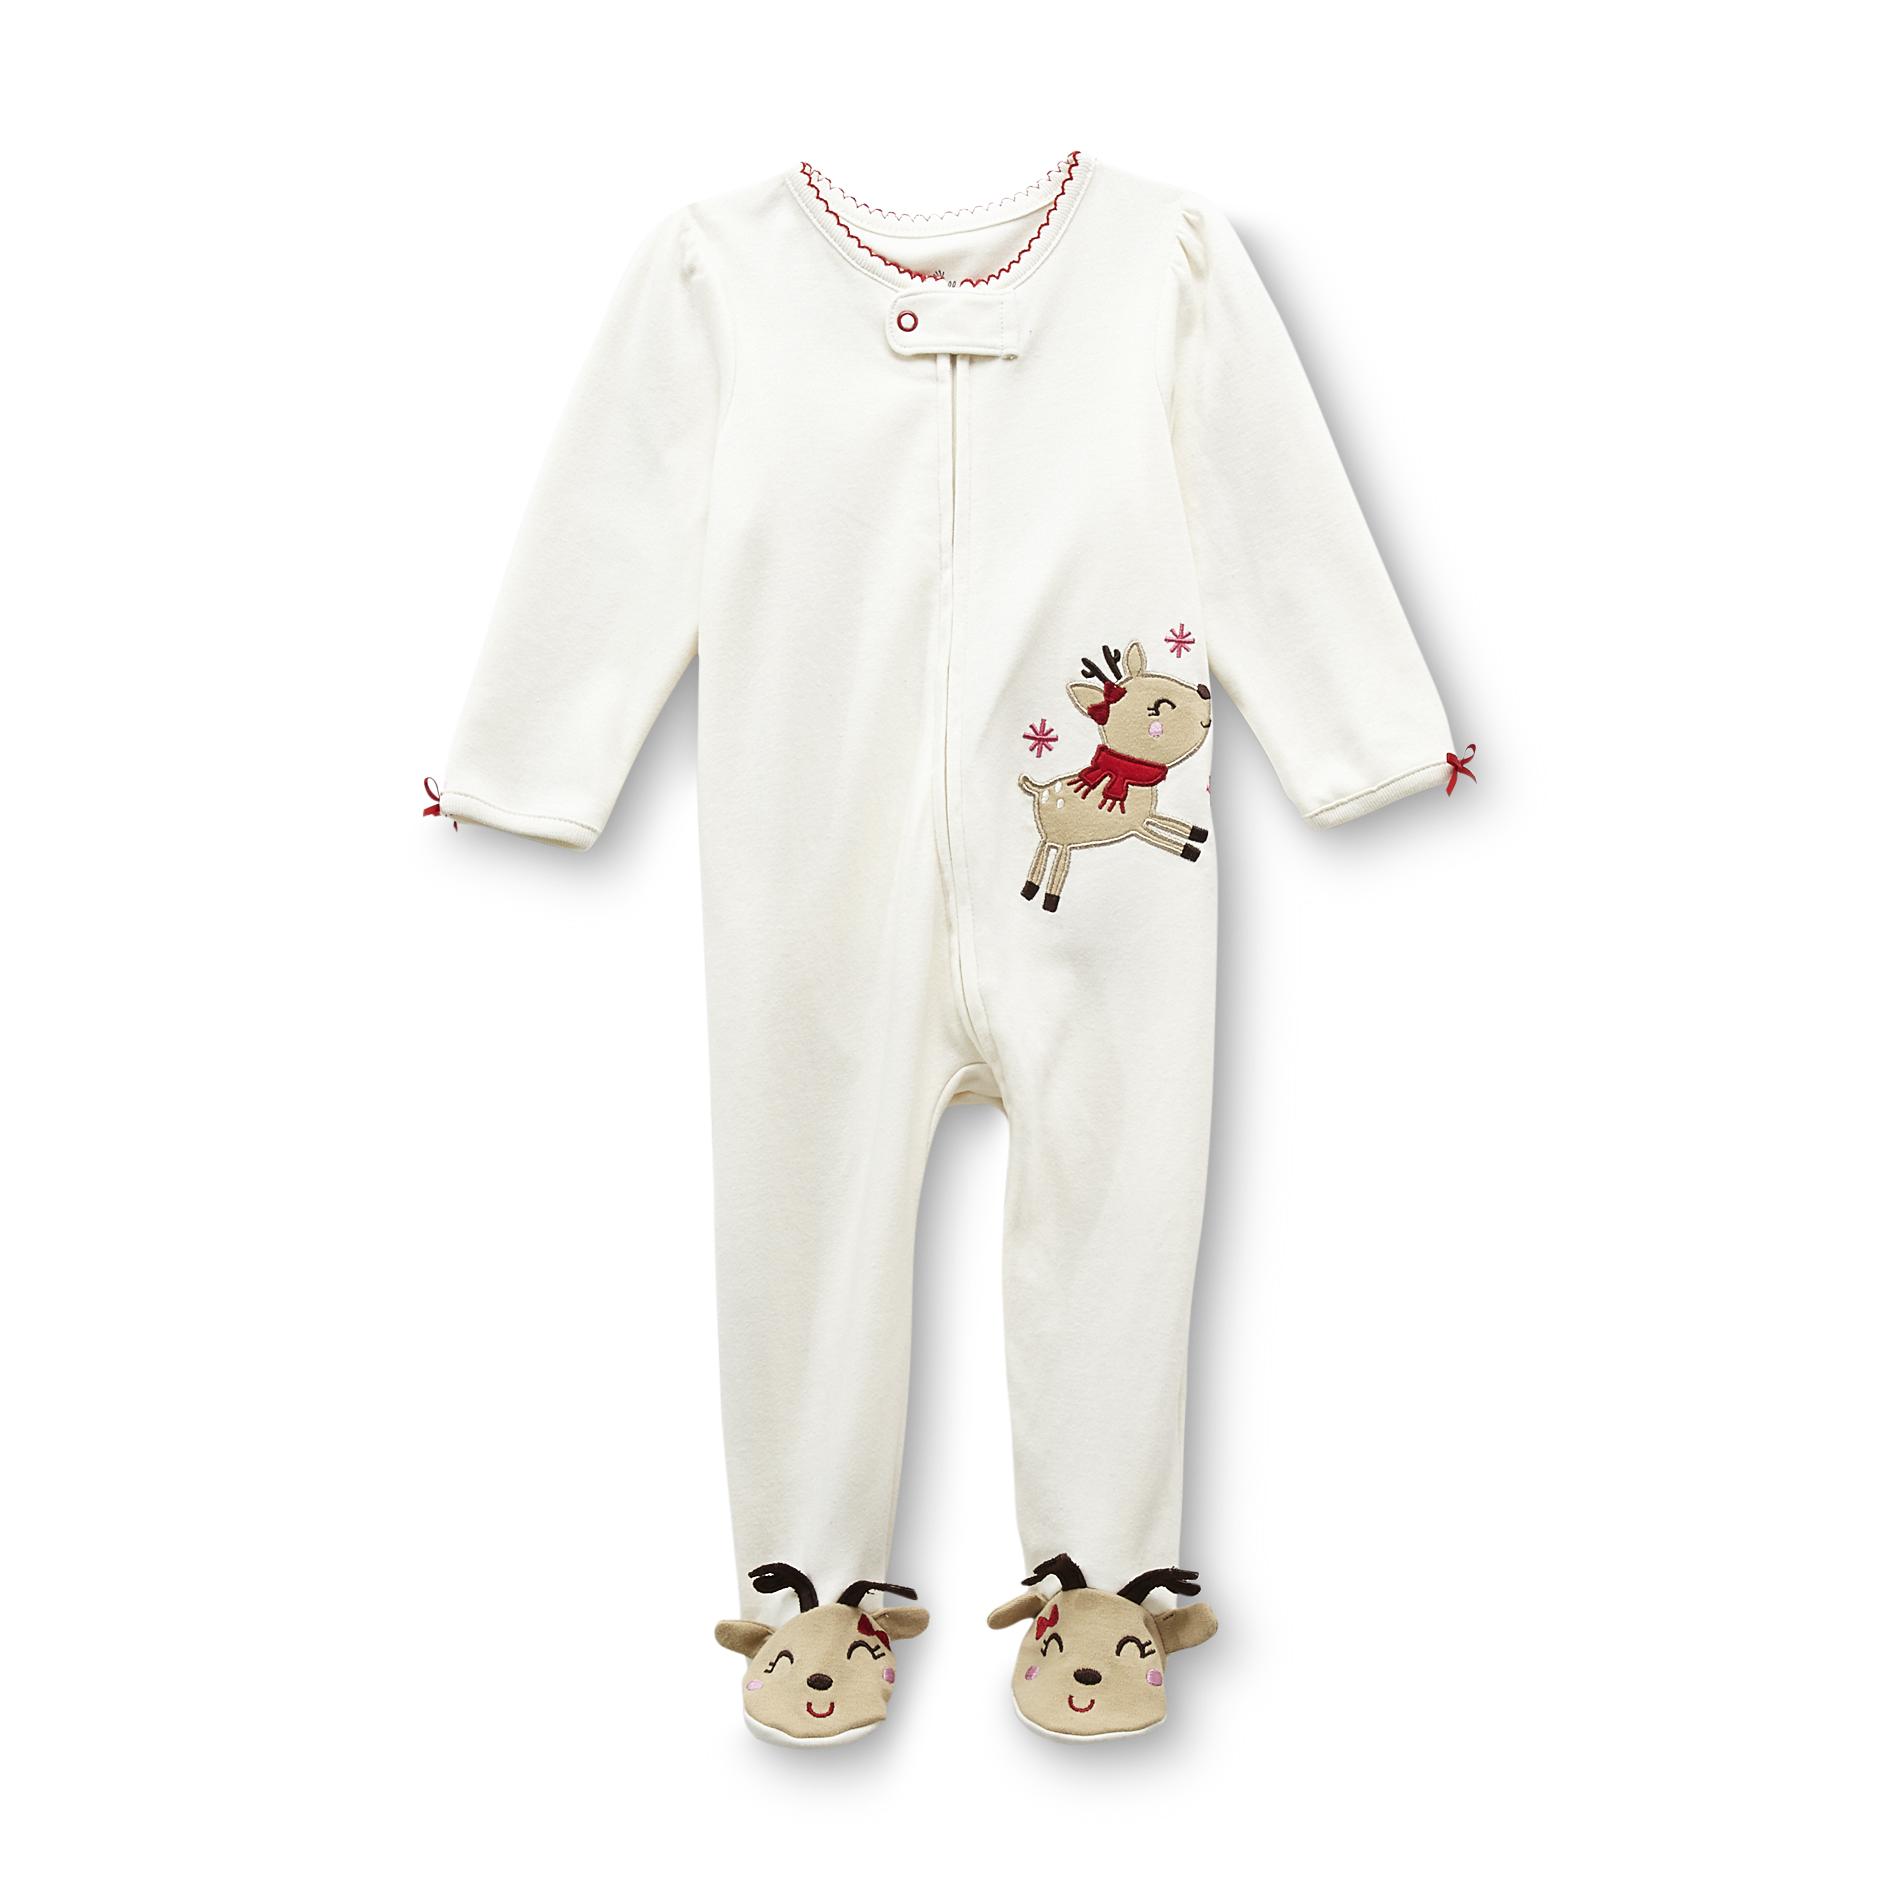 Small Wonders Newborn Girl's Sleeper Pajamas - Reindeer